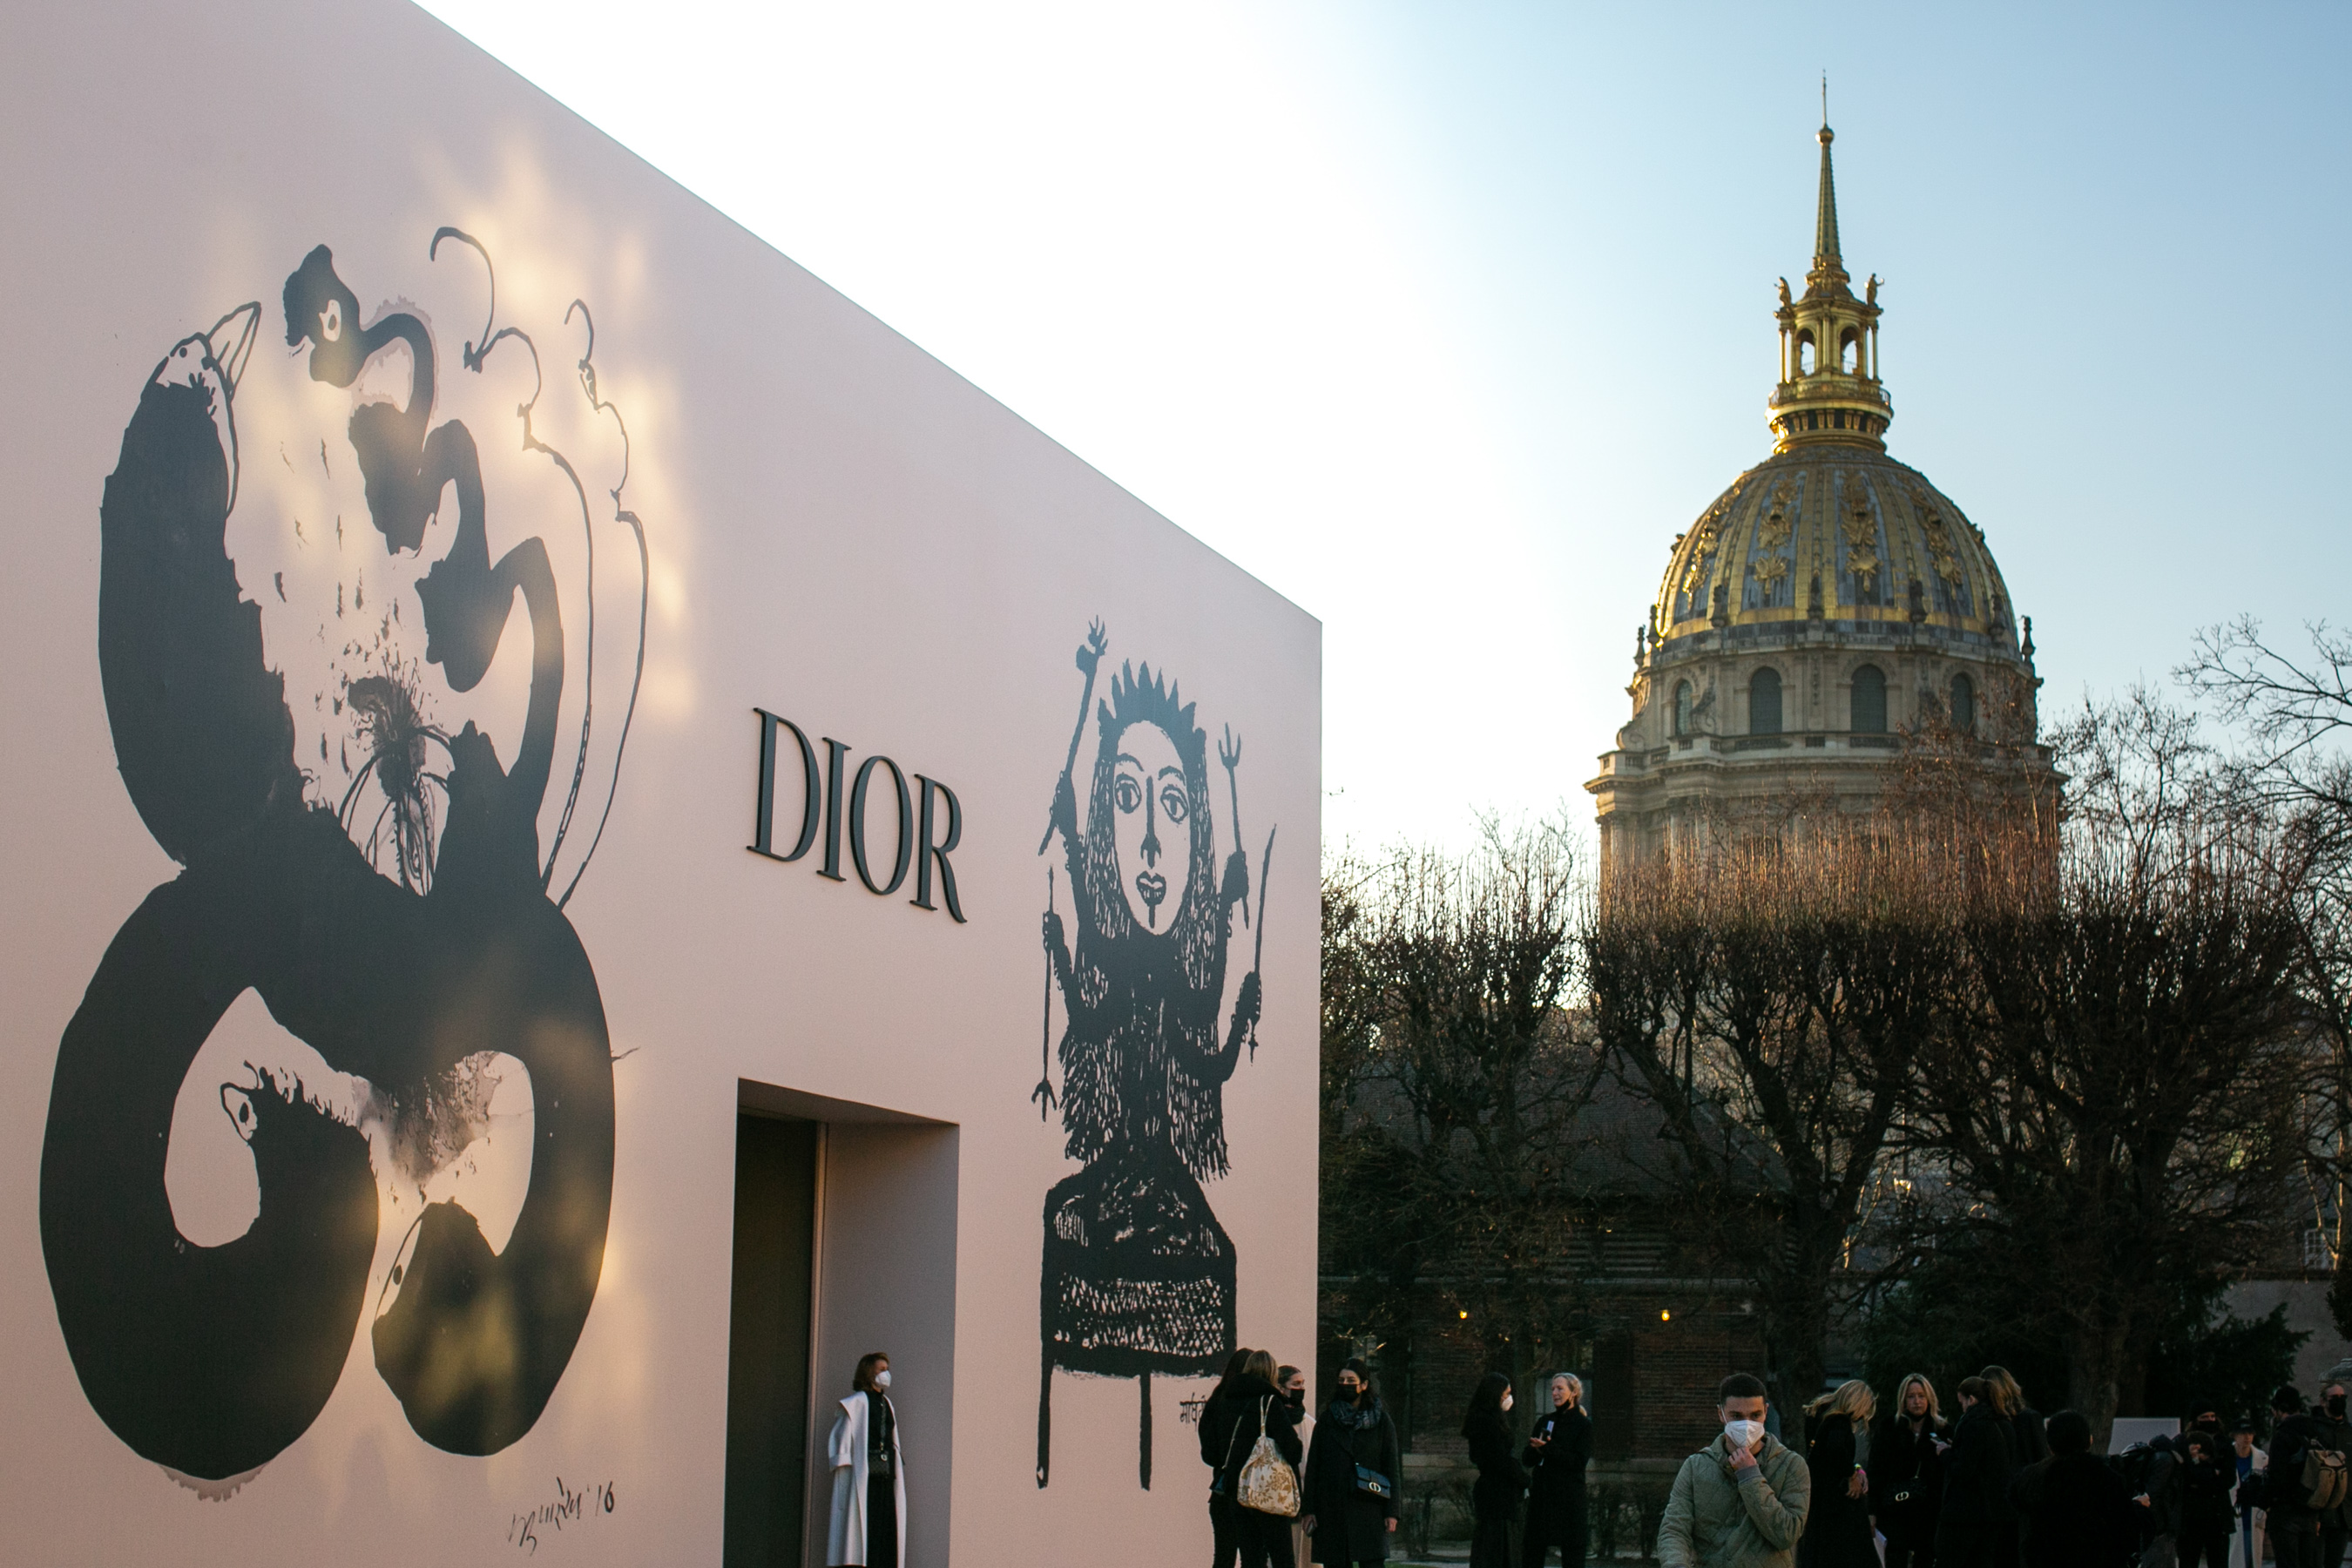 Christian Dior Spring 2022 Couture Fashion Show Atmosphere Fashion Show